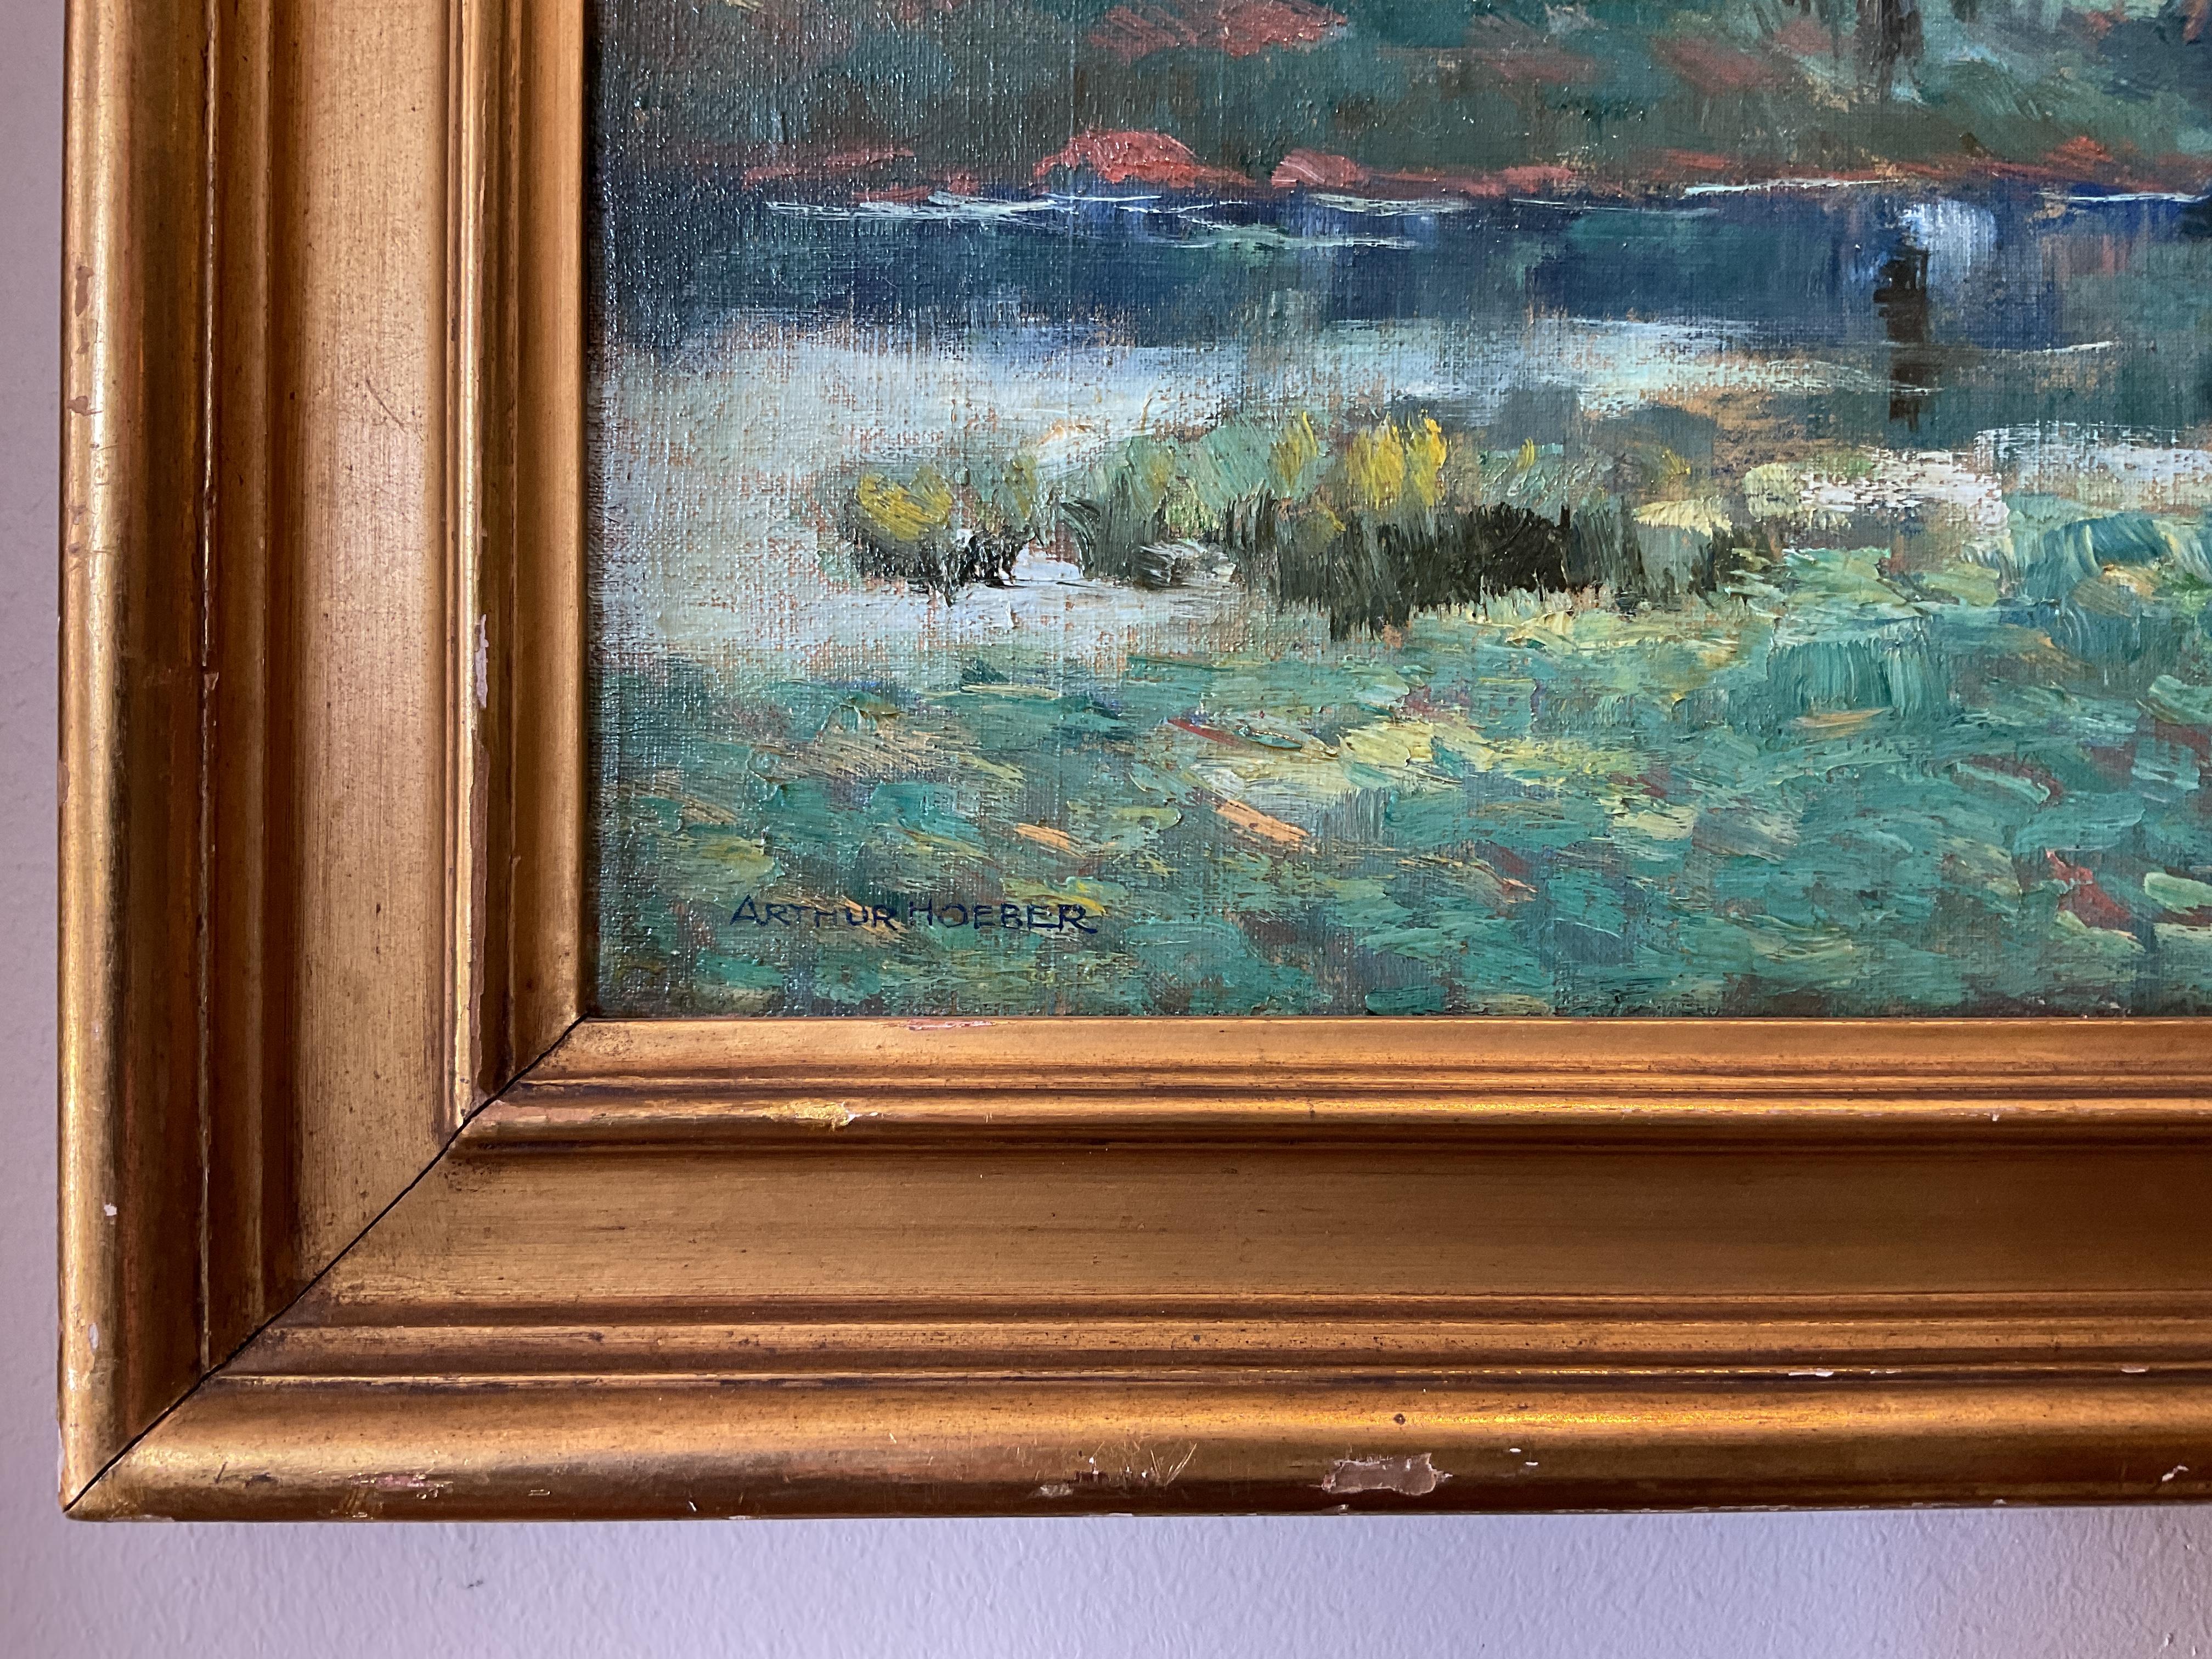 Antique American Impressionist Landscape Painting - “Willow” by Arthur Hoeber For Sale 3